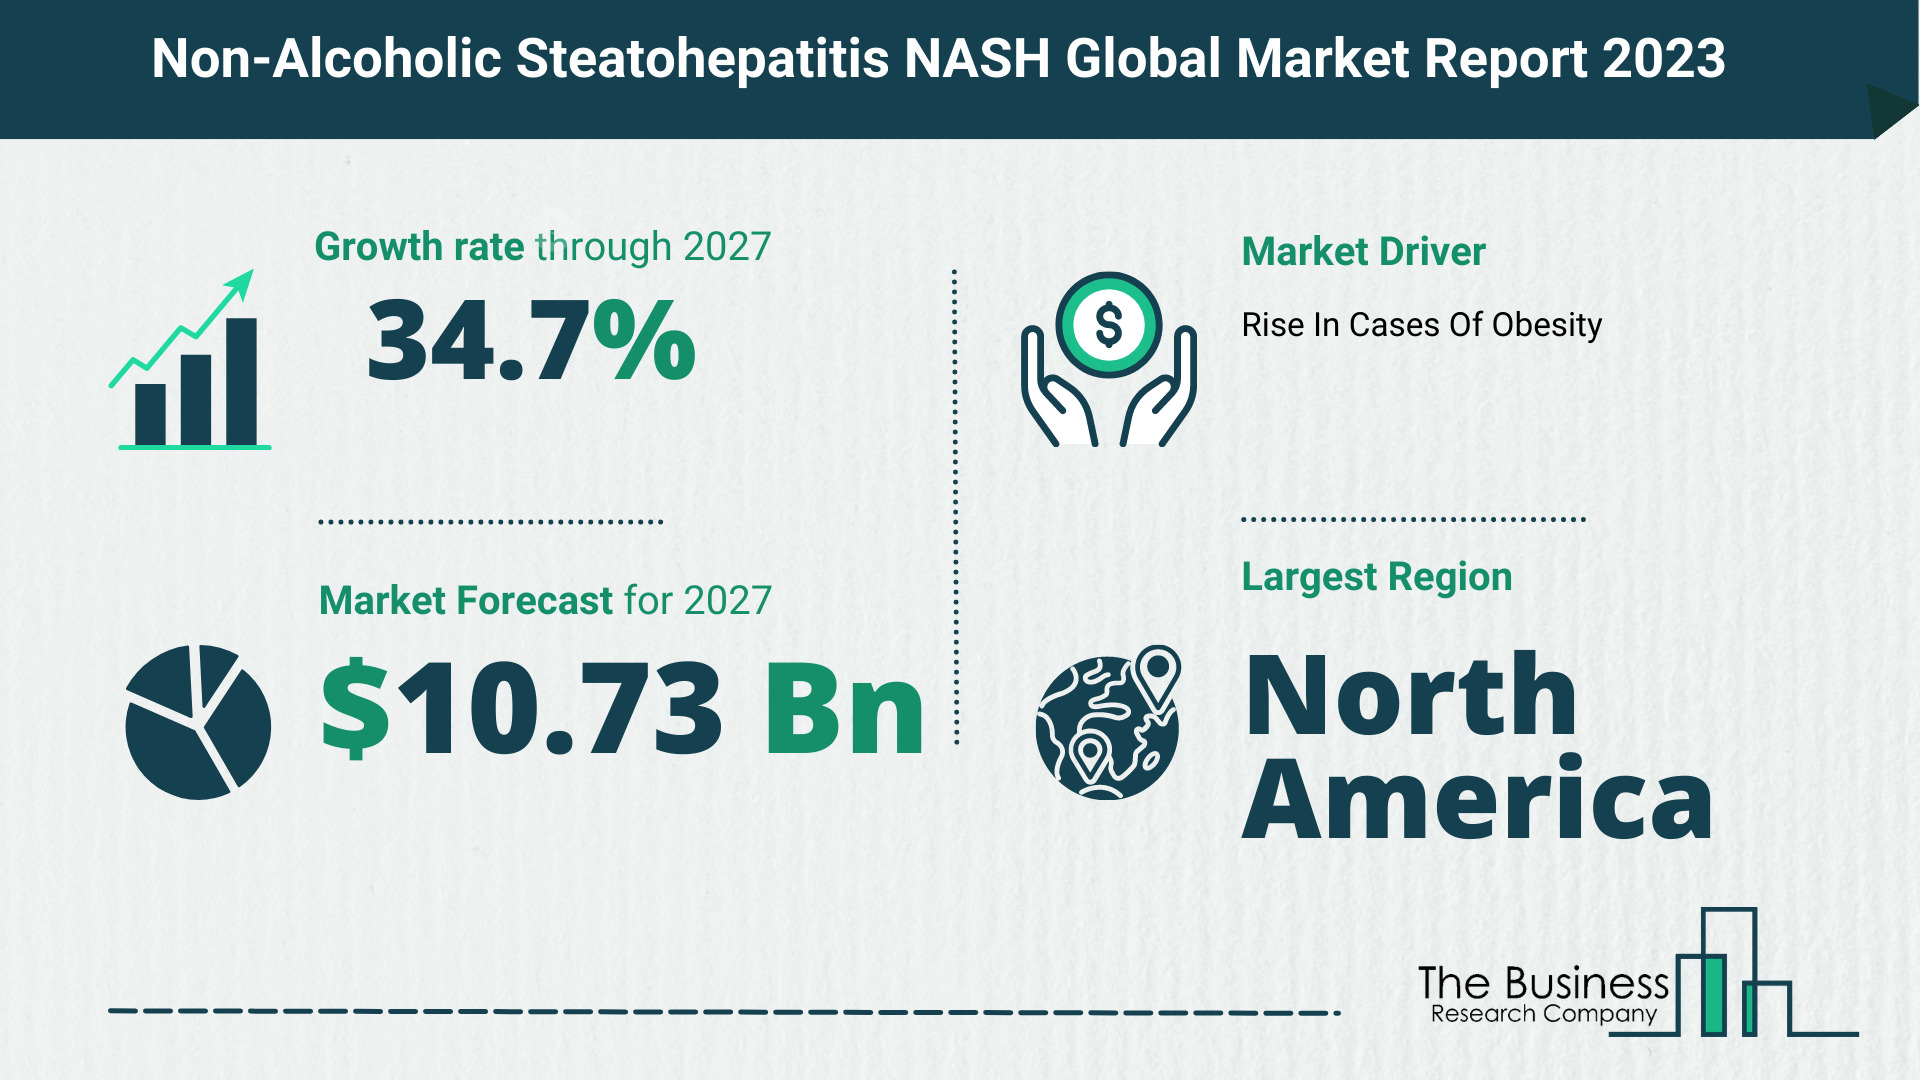 Global Non-Alcoholic Steatohepatitis NASH Market Opportunities And Strategies 2023